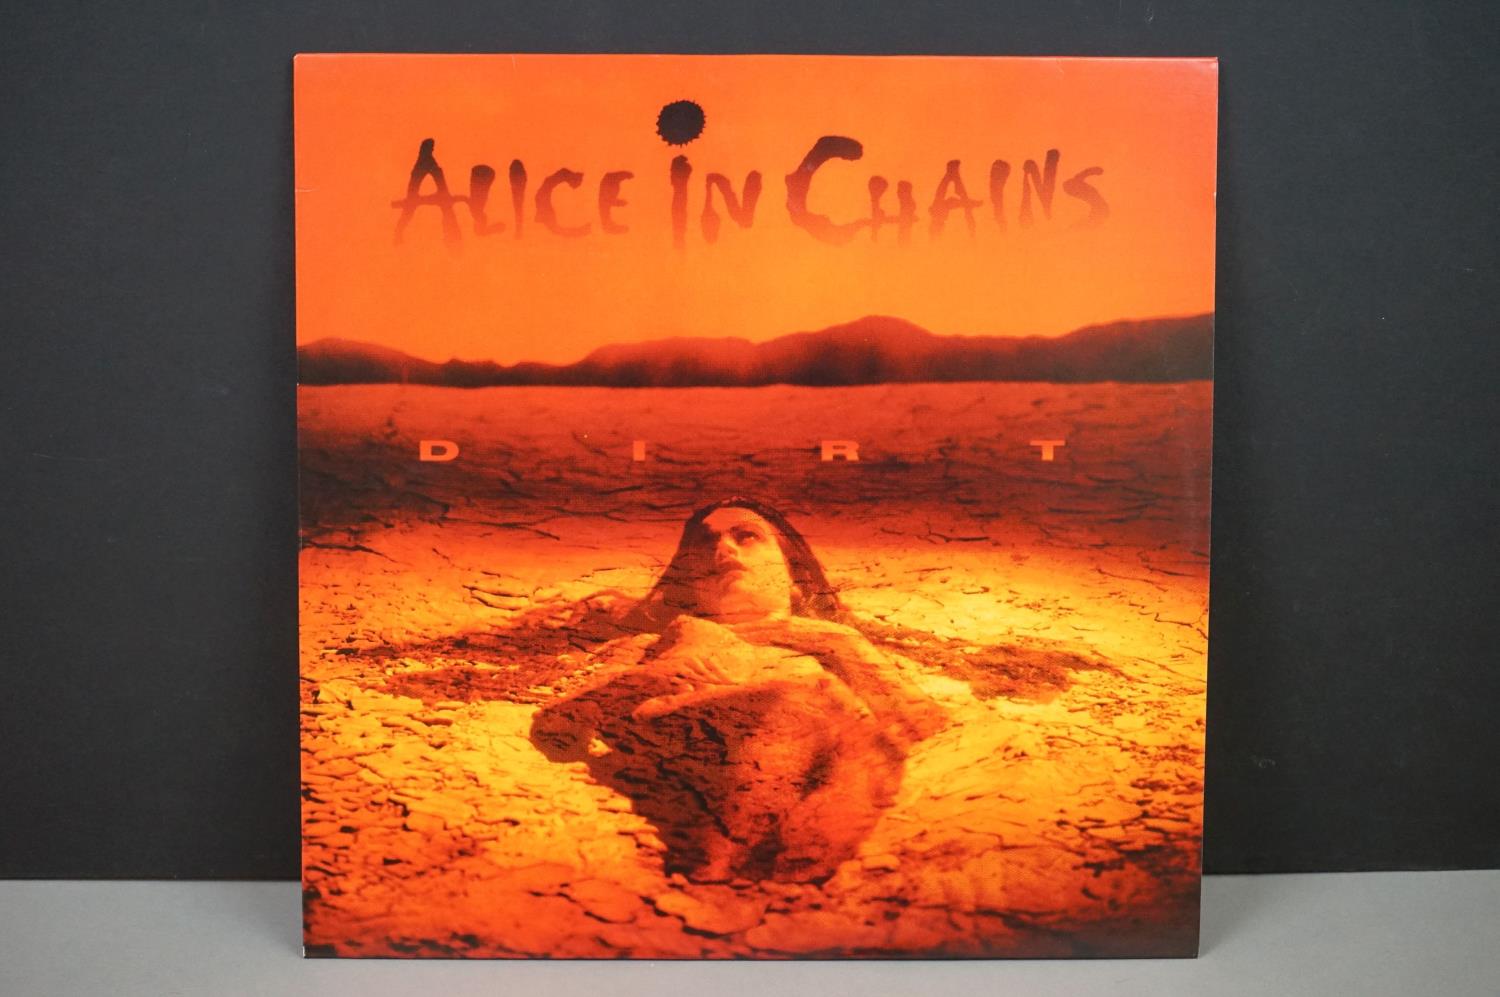 Vinyl - Alice In Chains Dirt (Simply Vinyl ? S160 025) Simply Vinyl reissue. No Simply Vinyl outer